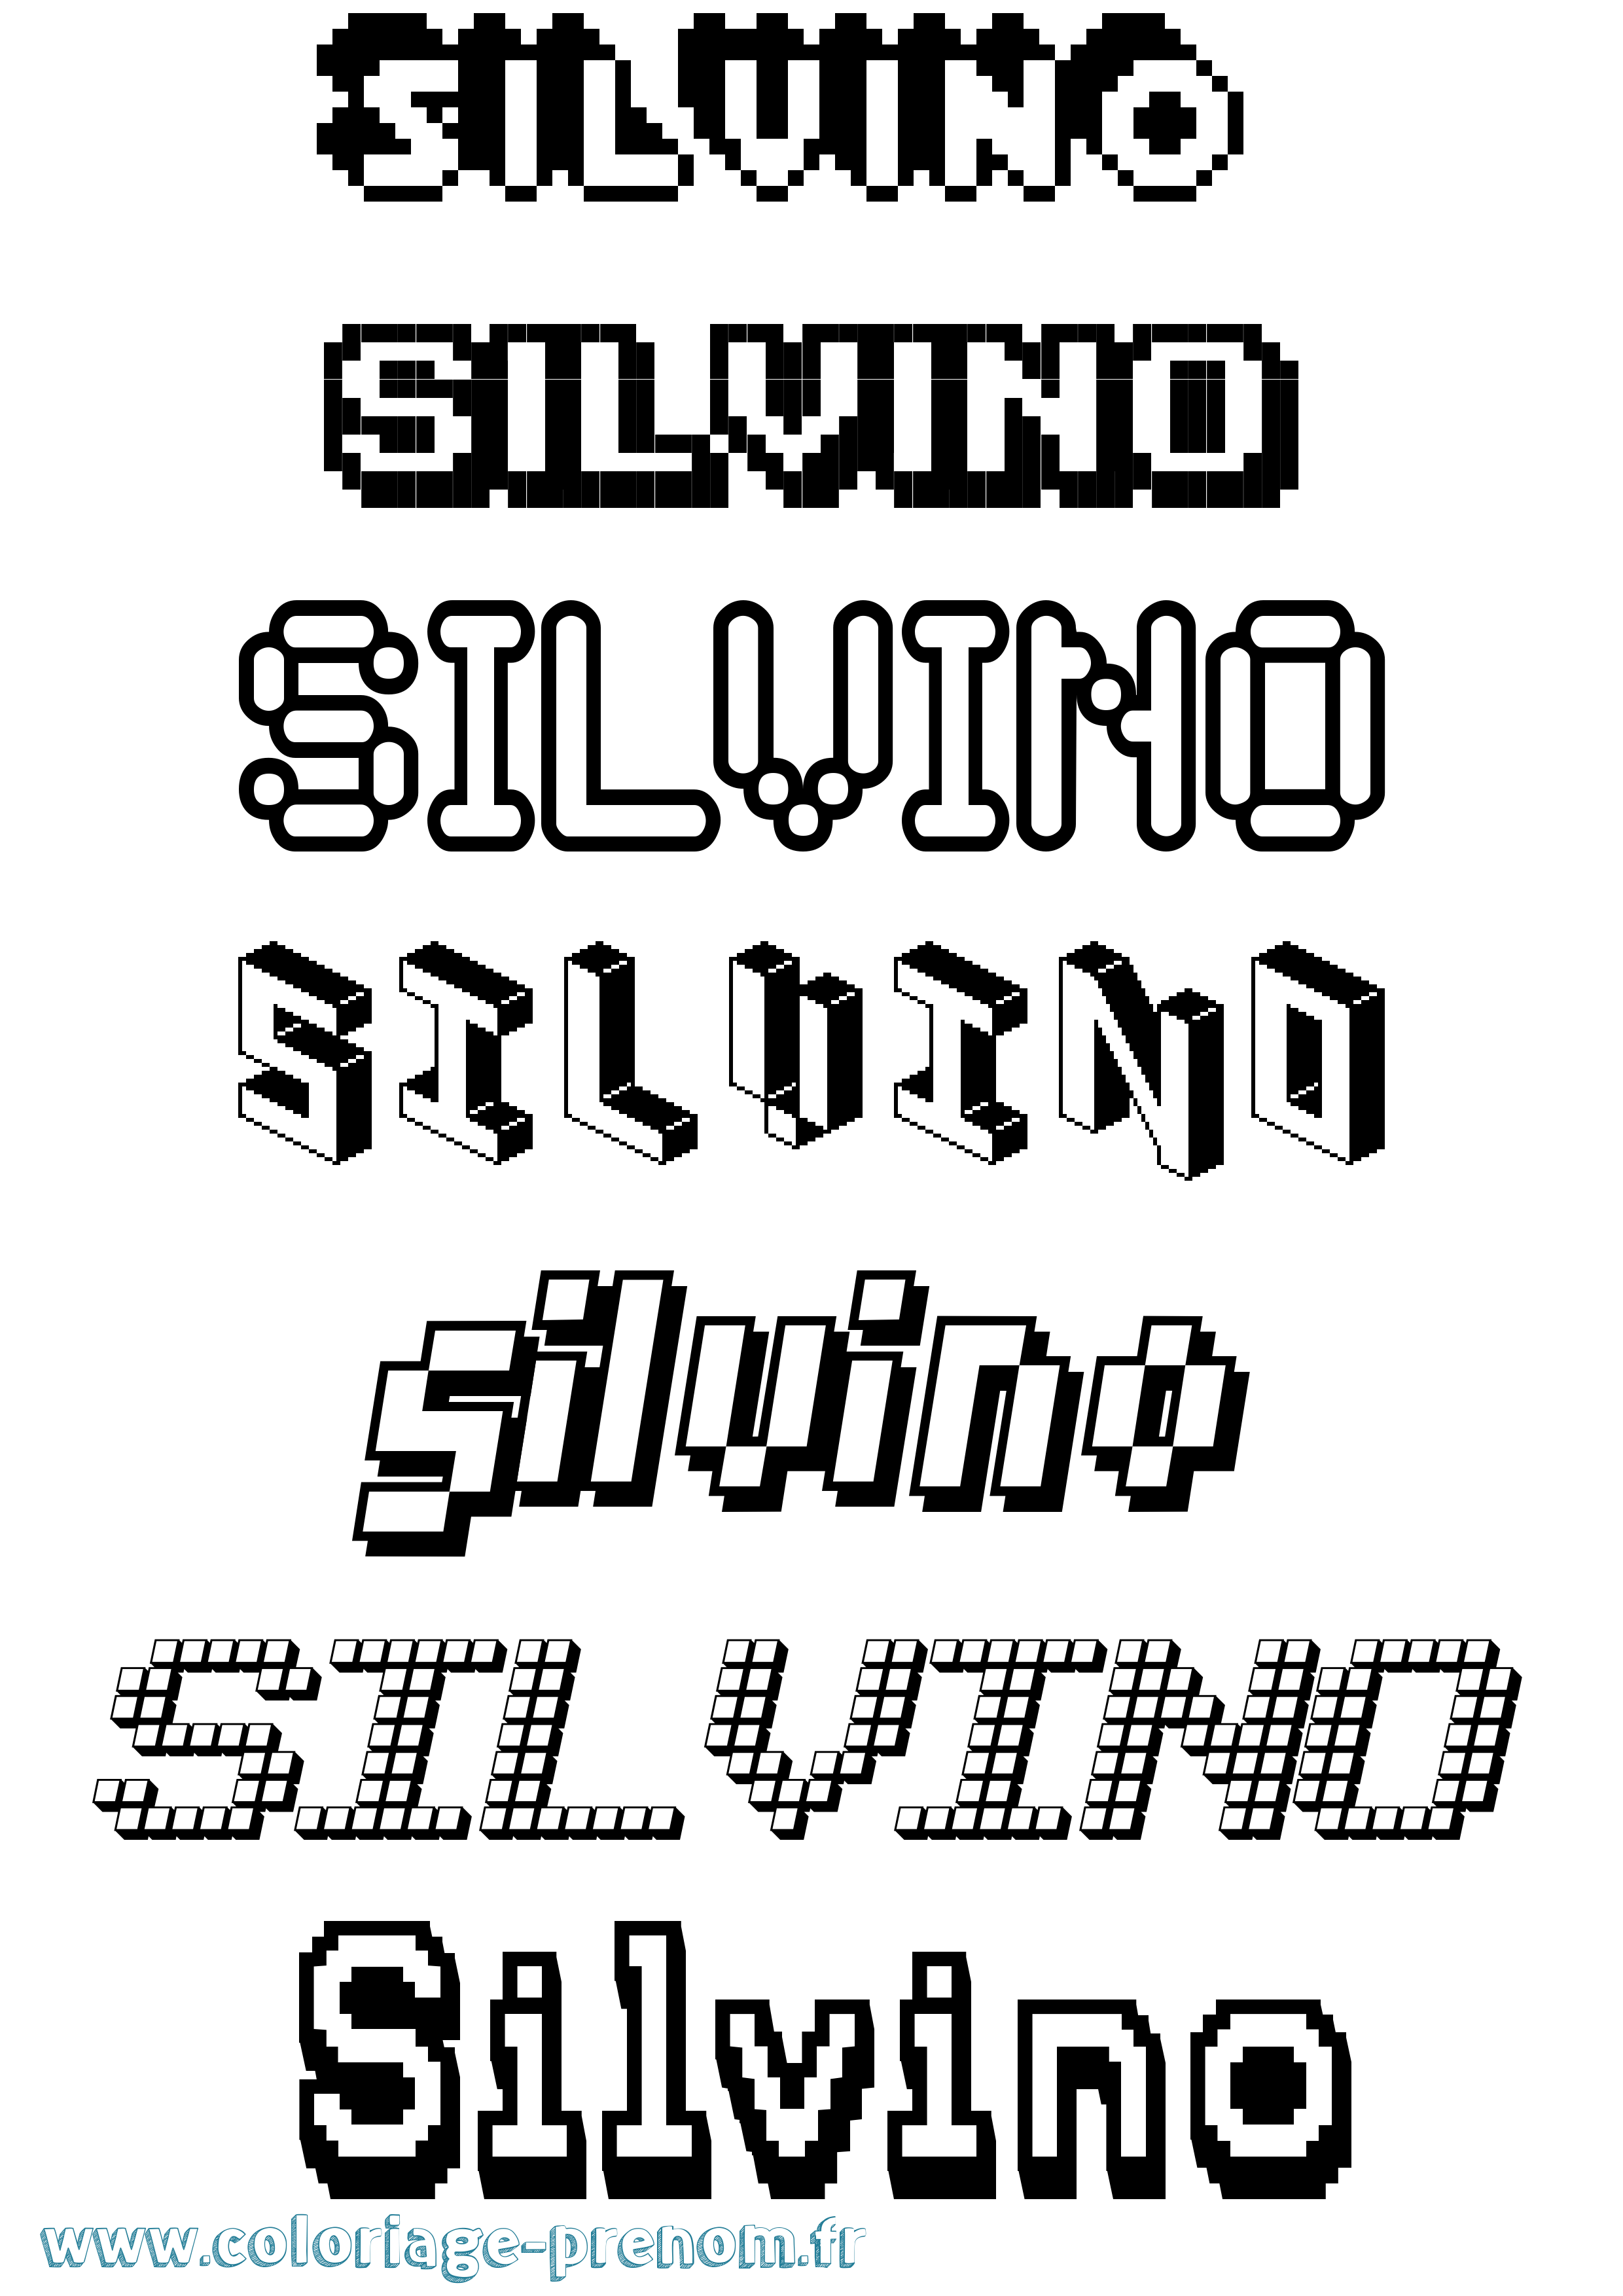 Coloriage prénom Silvino Pixel